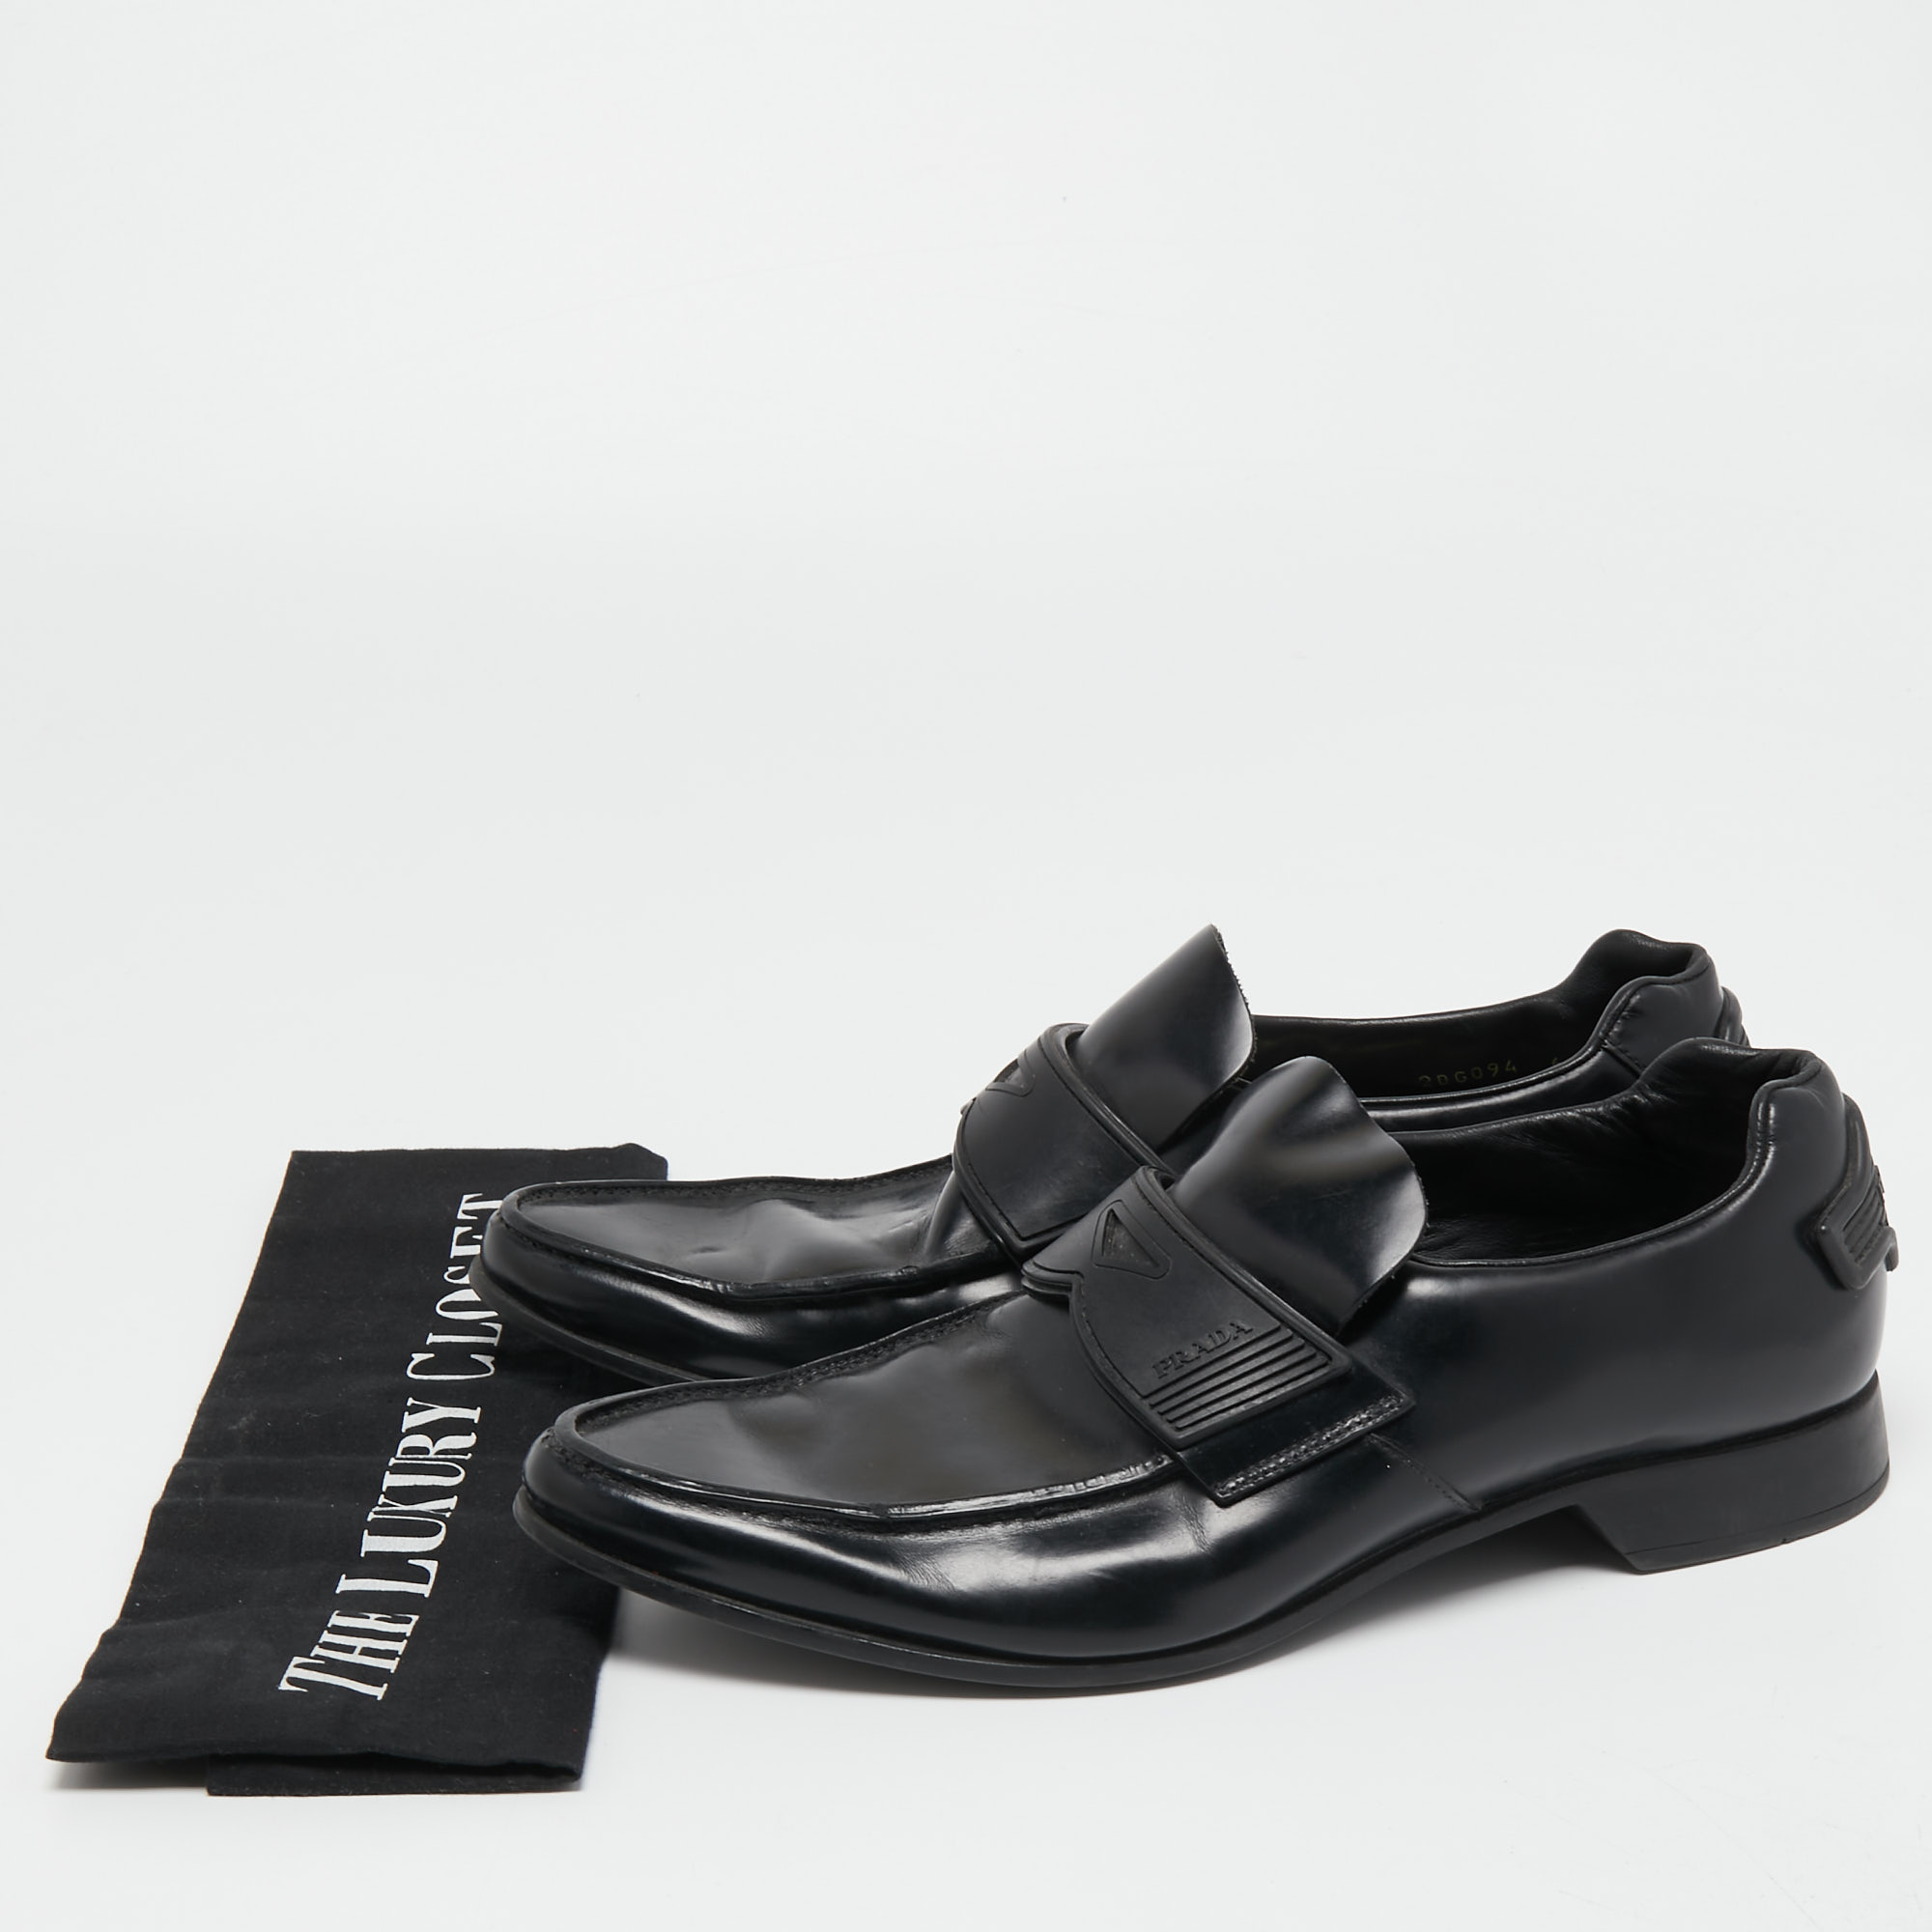 Prada Black Leather Slip On Loafers Size 40.5